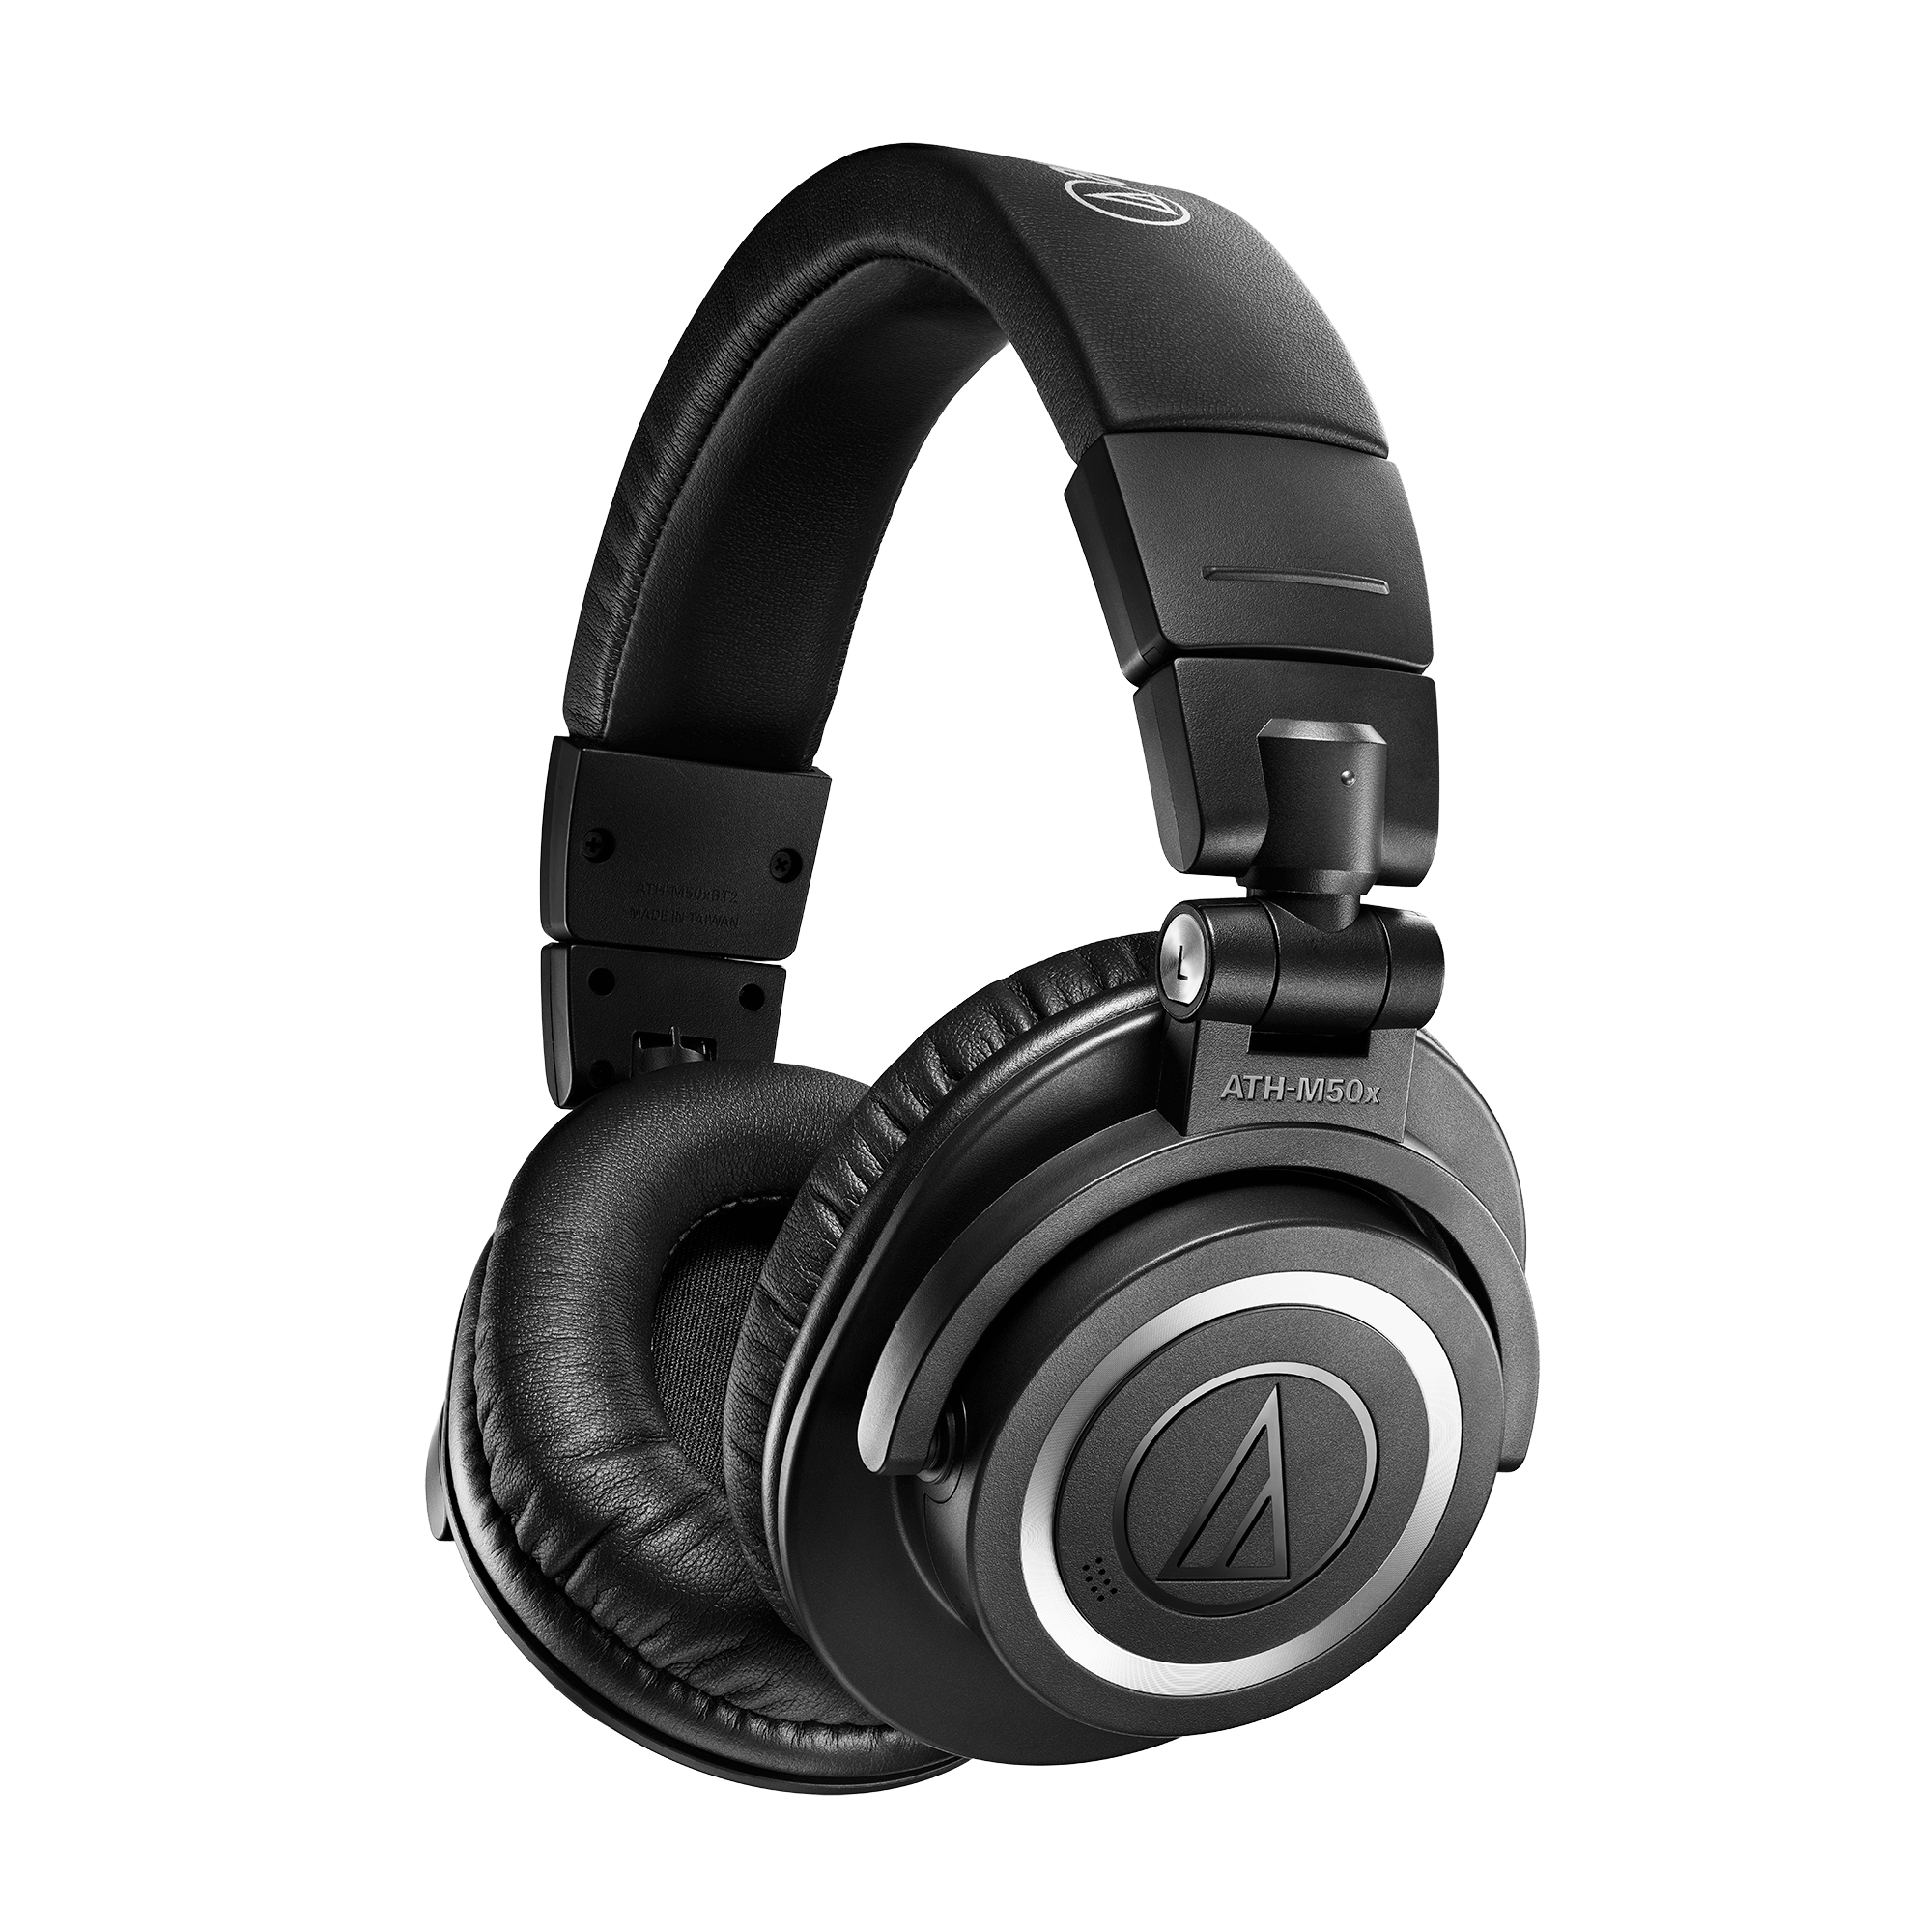 I made my Audio Technica m50x headphones wireless. Here's some